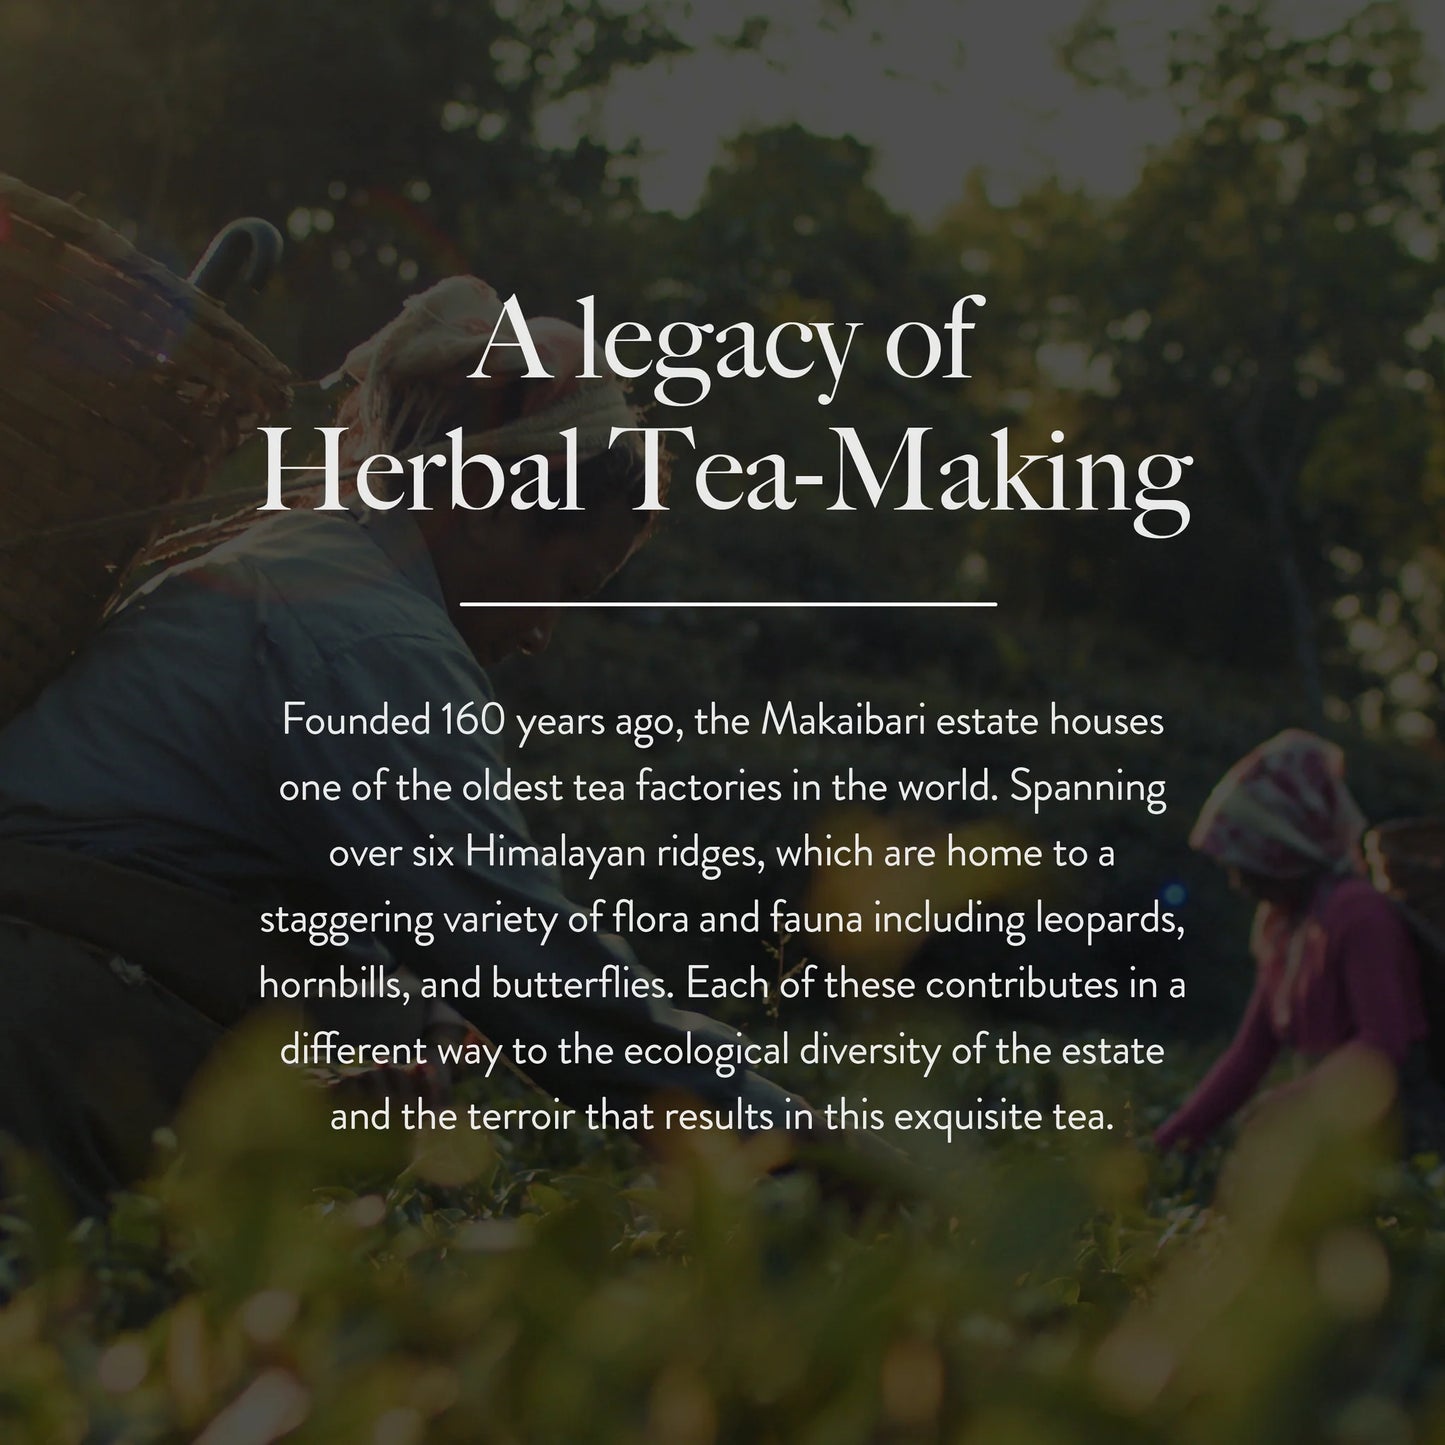 Wellbeing Digest Adaptogenic Green Tea